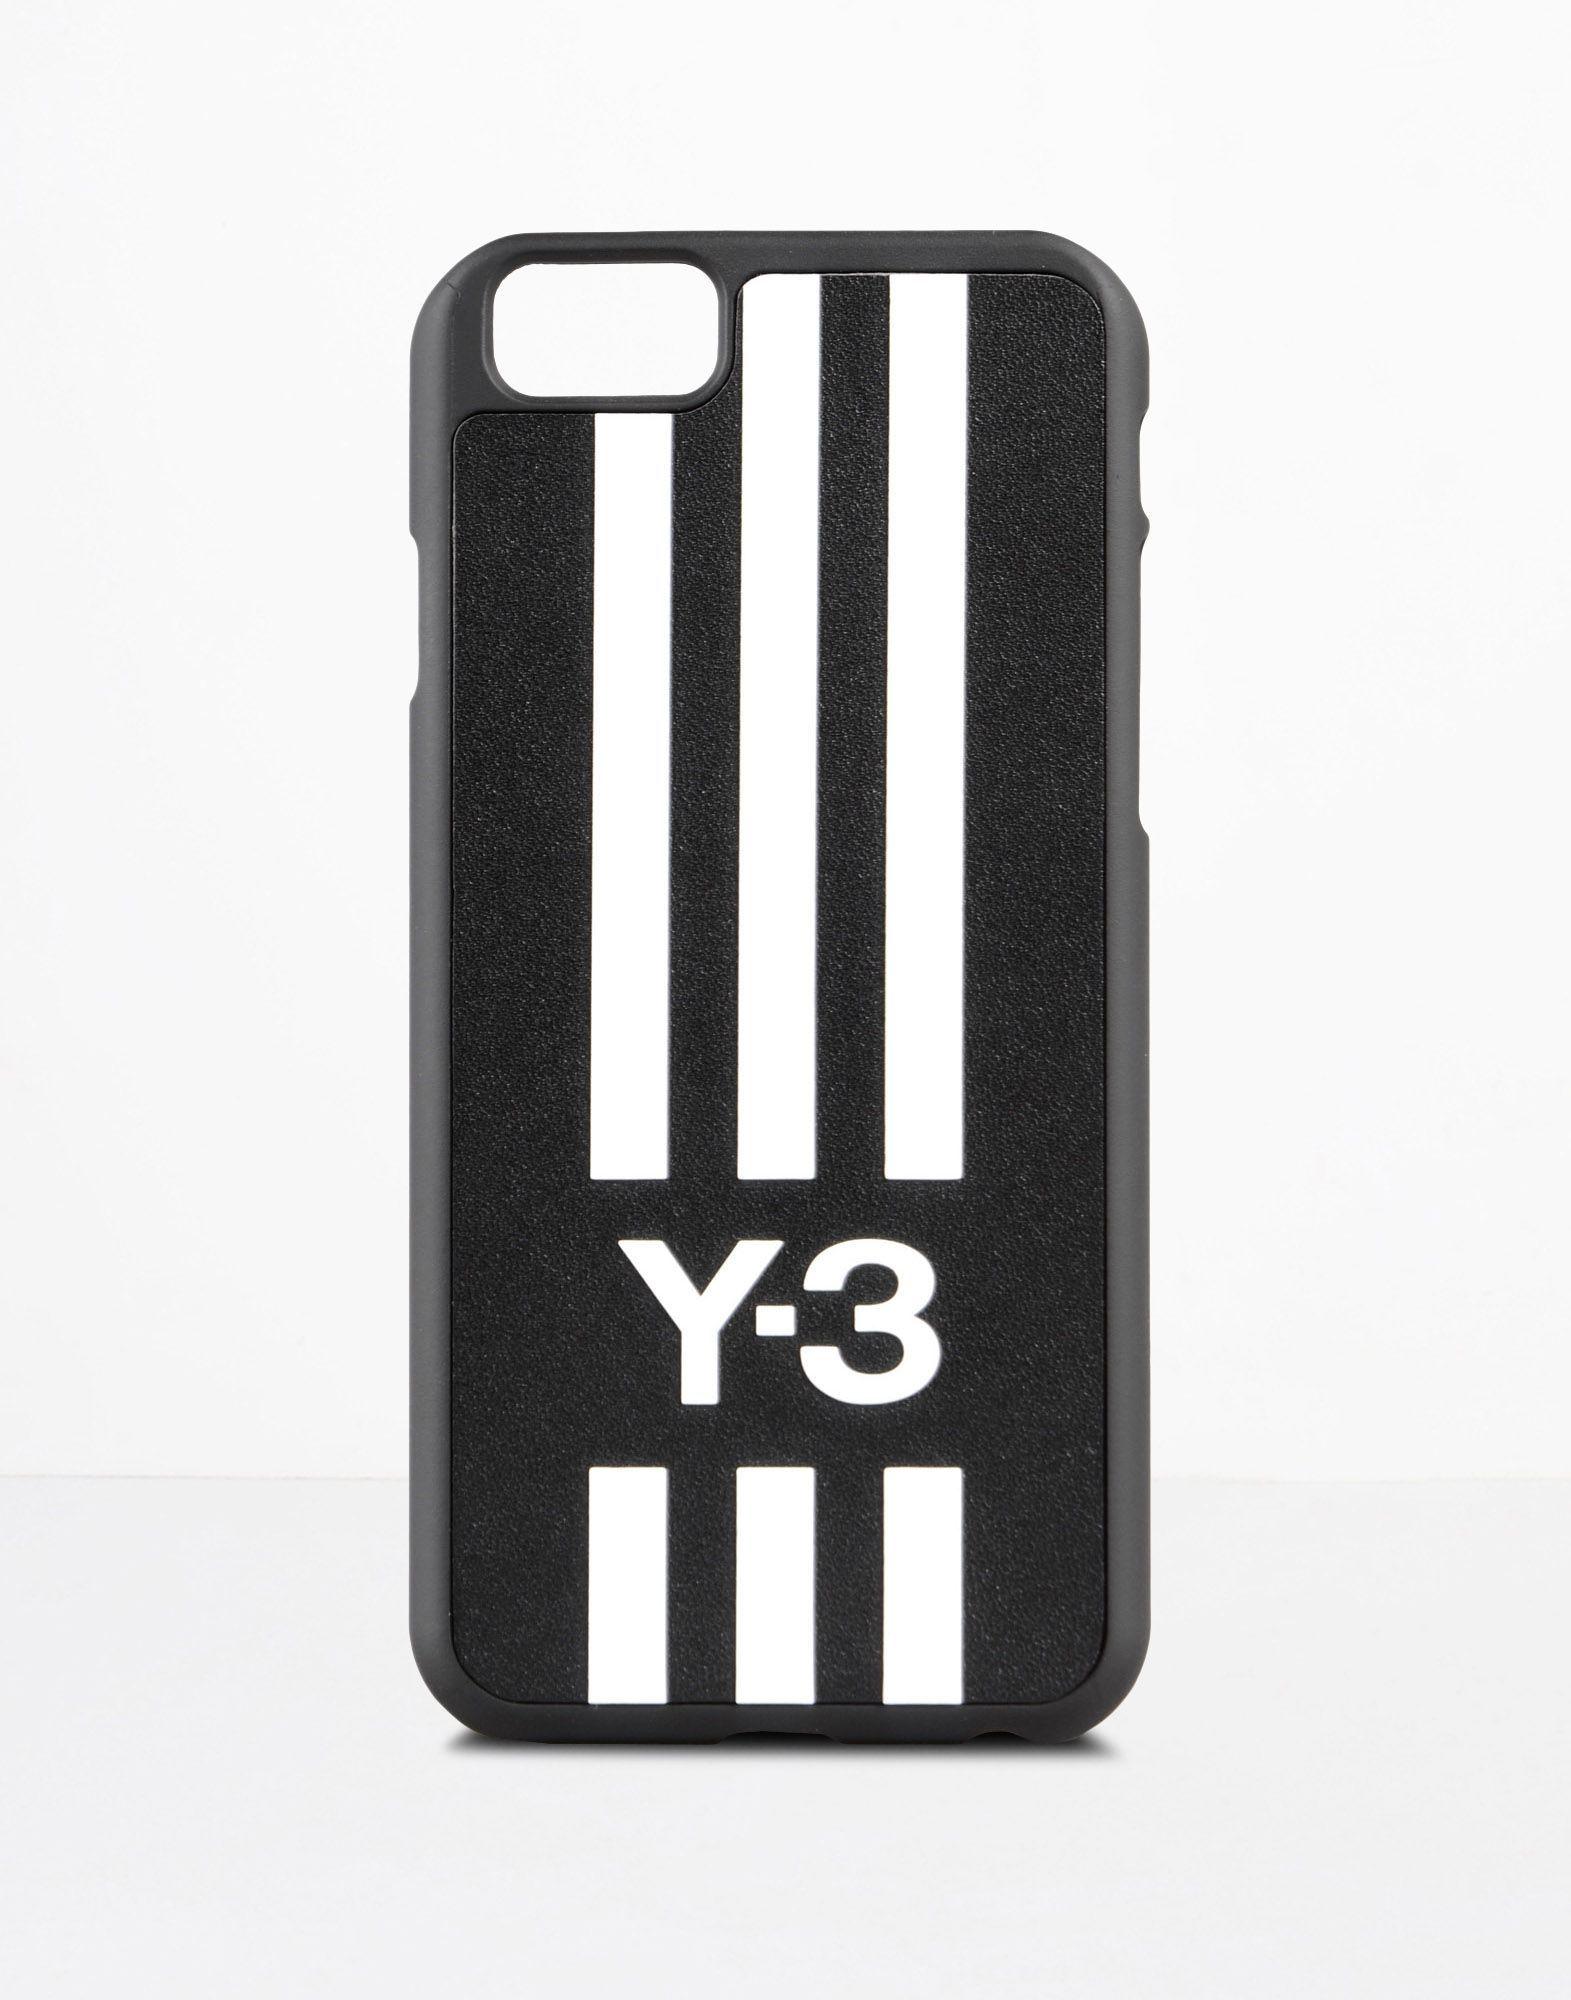 Y-3 Logo - Y 3 LOGO STRIPES MOULDED IPHONE 6 CASE Phone Cases ...